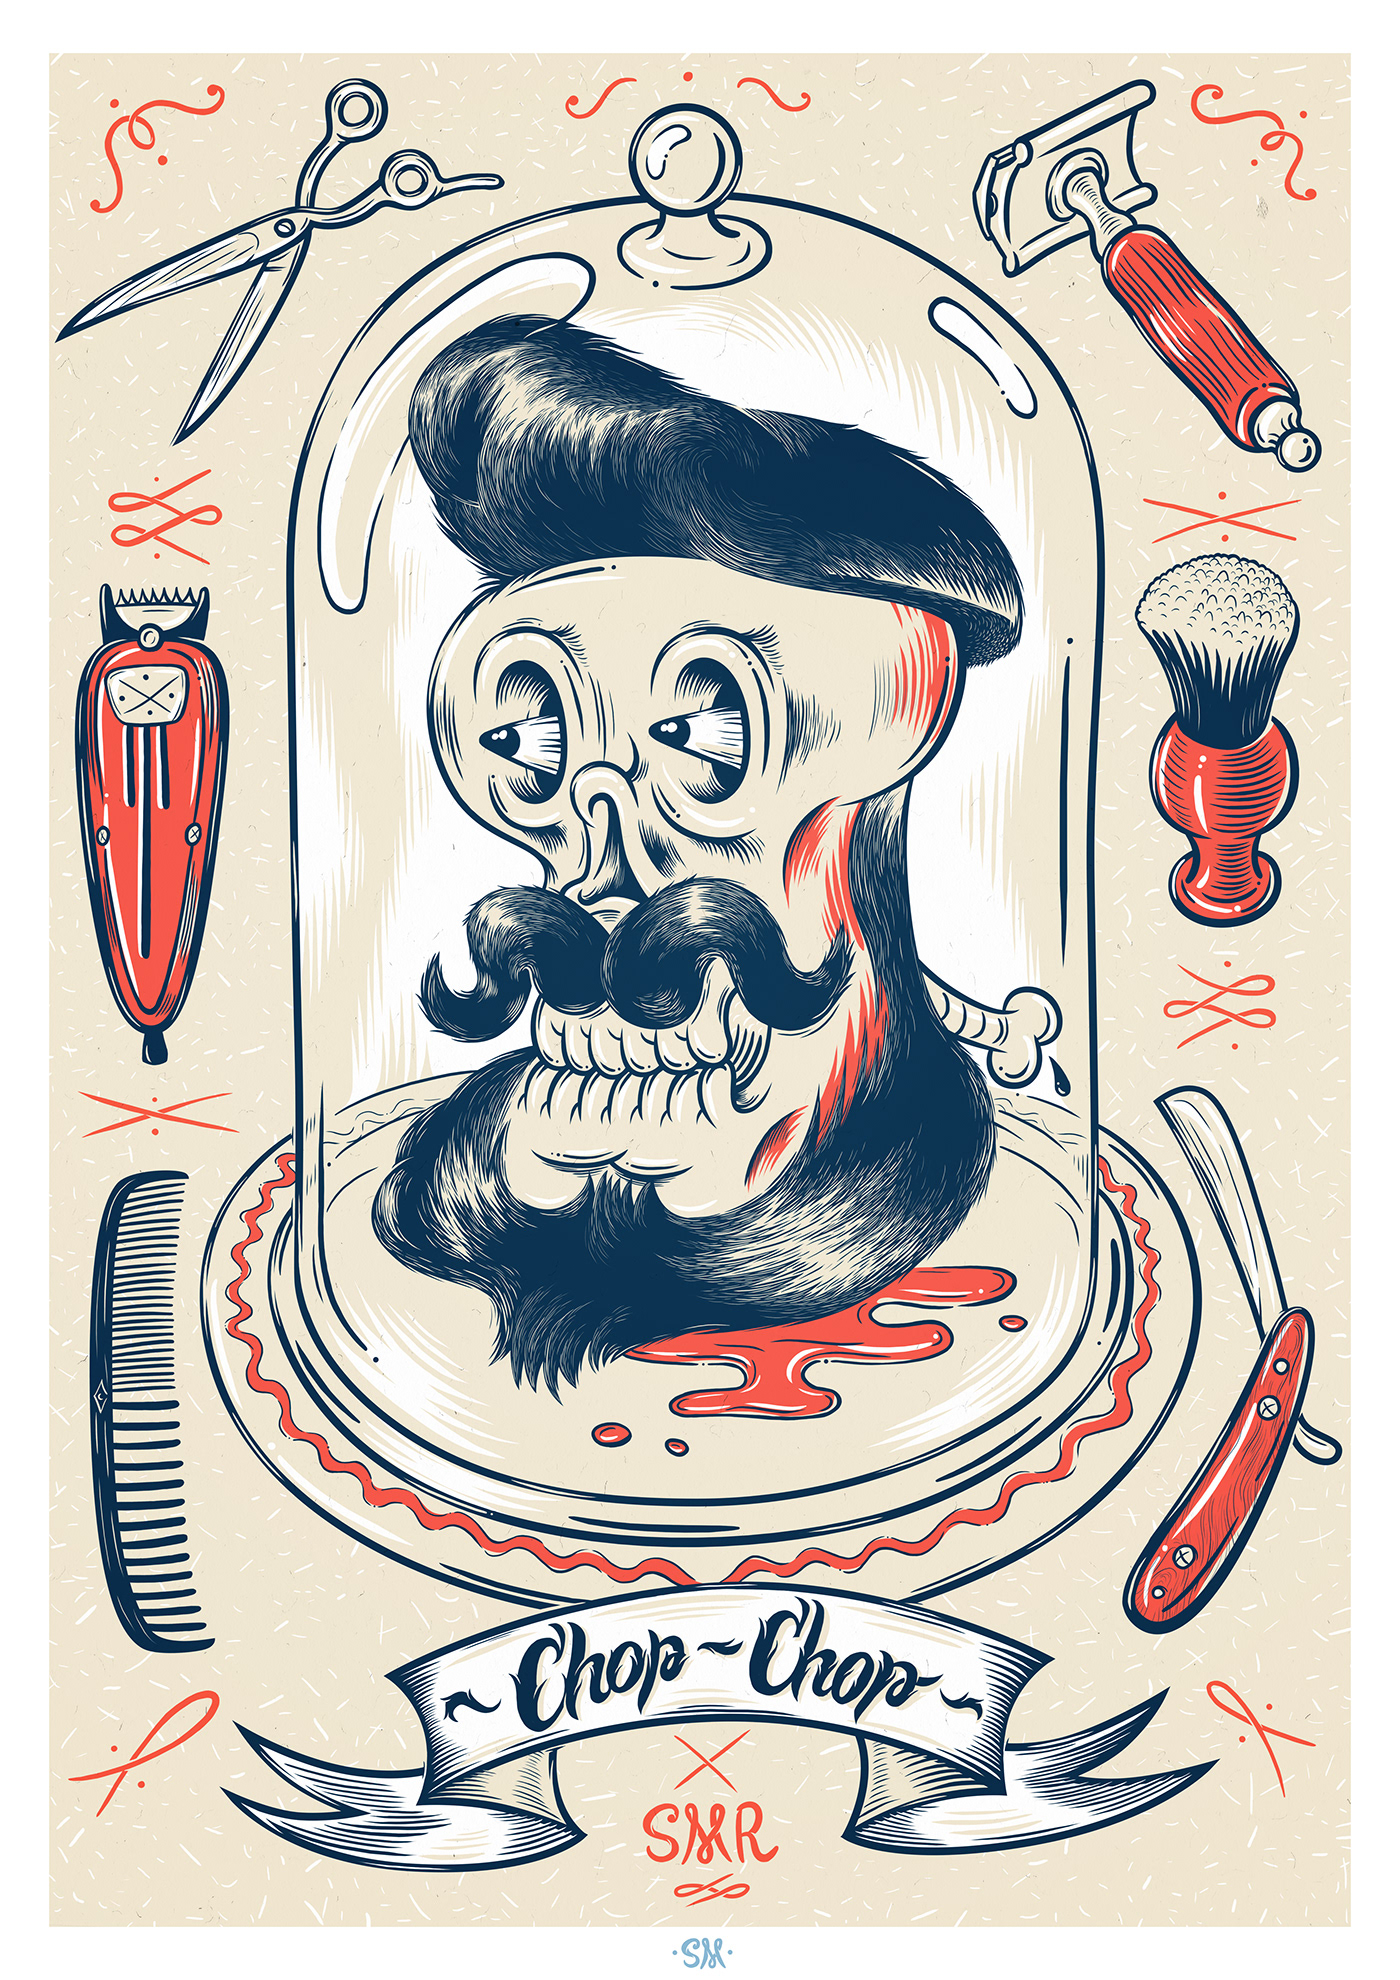 chop-chop barbershop barber shop haircut shaver Razor clippers scissors beard mustache poster skull Dead man tattoo ROck Poster